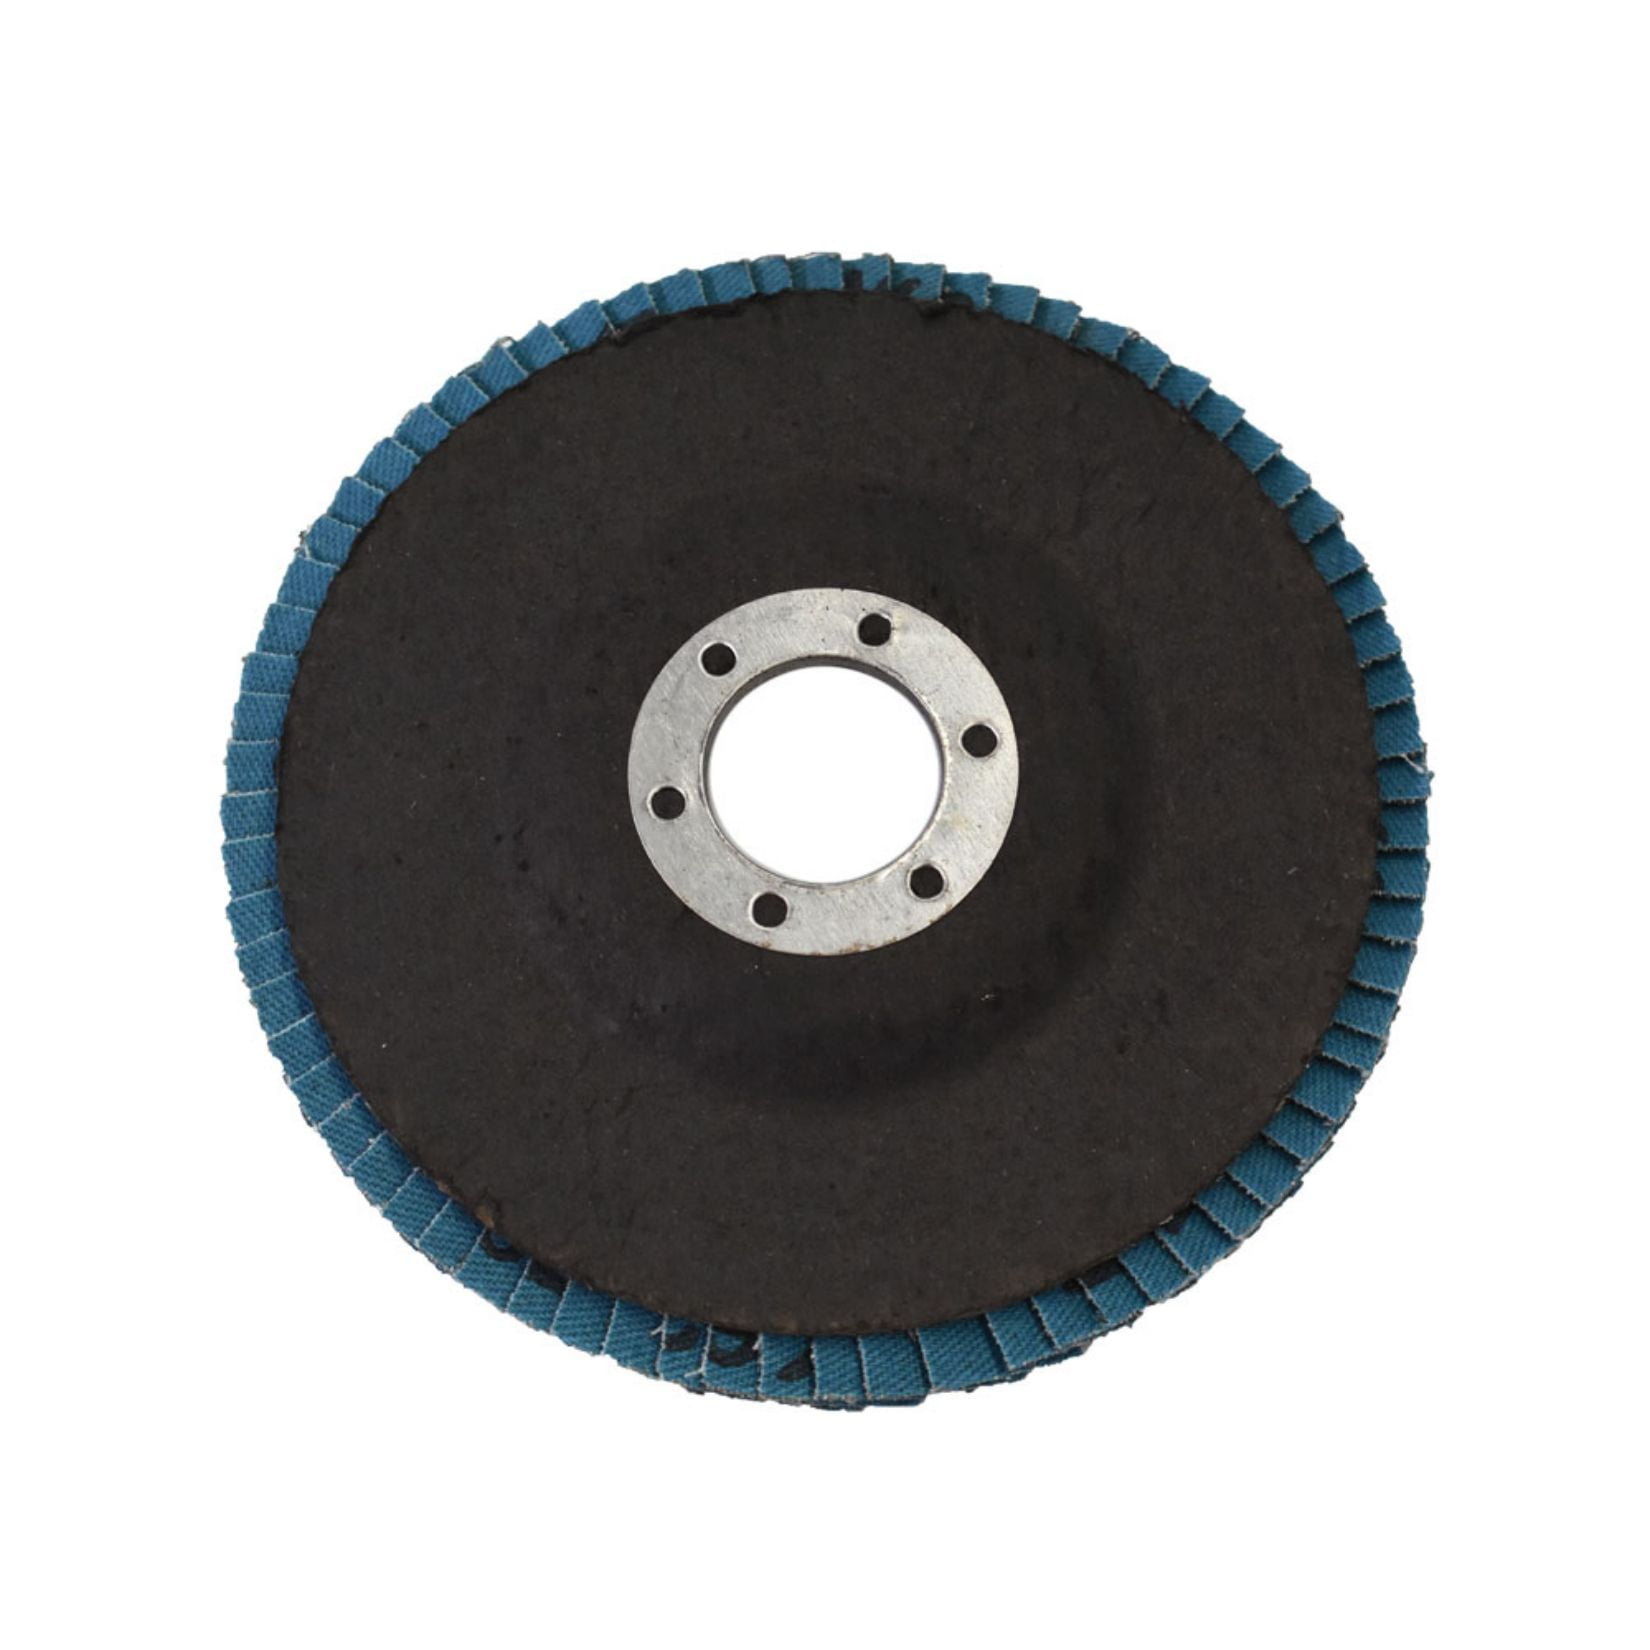 10pcs Premium Zirconia FLAP DISCS 5"x7/8" 40 grit Sanding Grinding Wheel